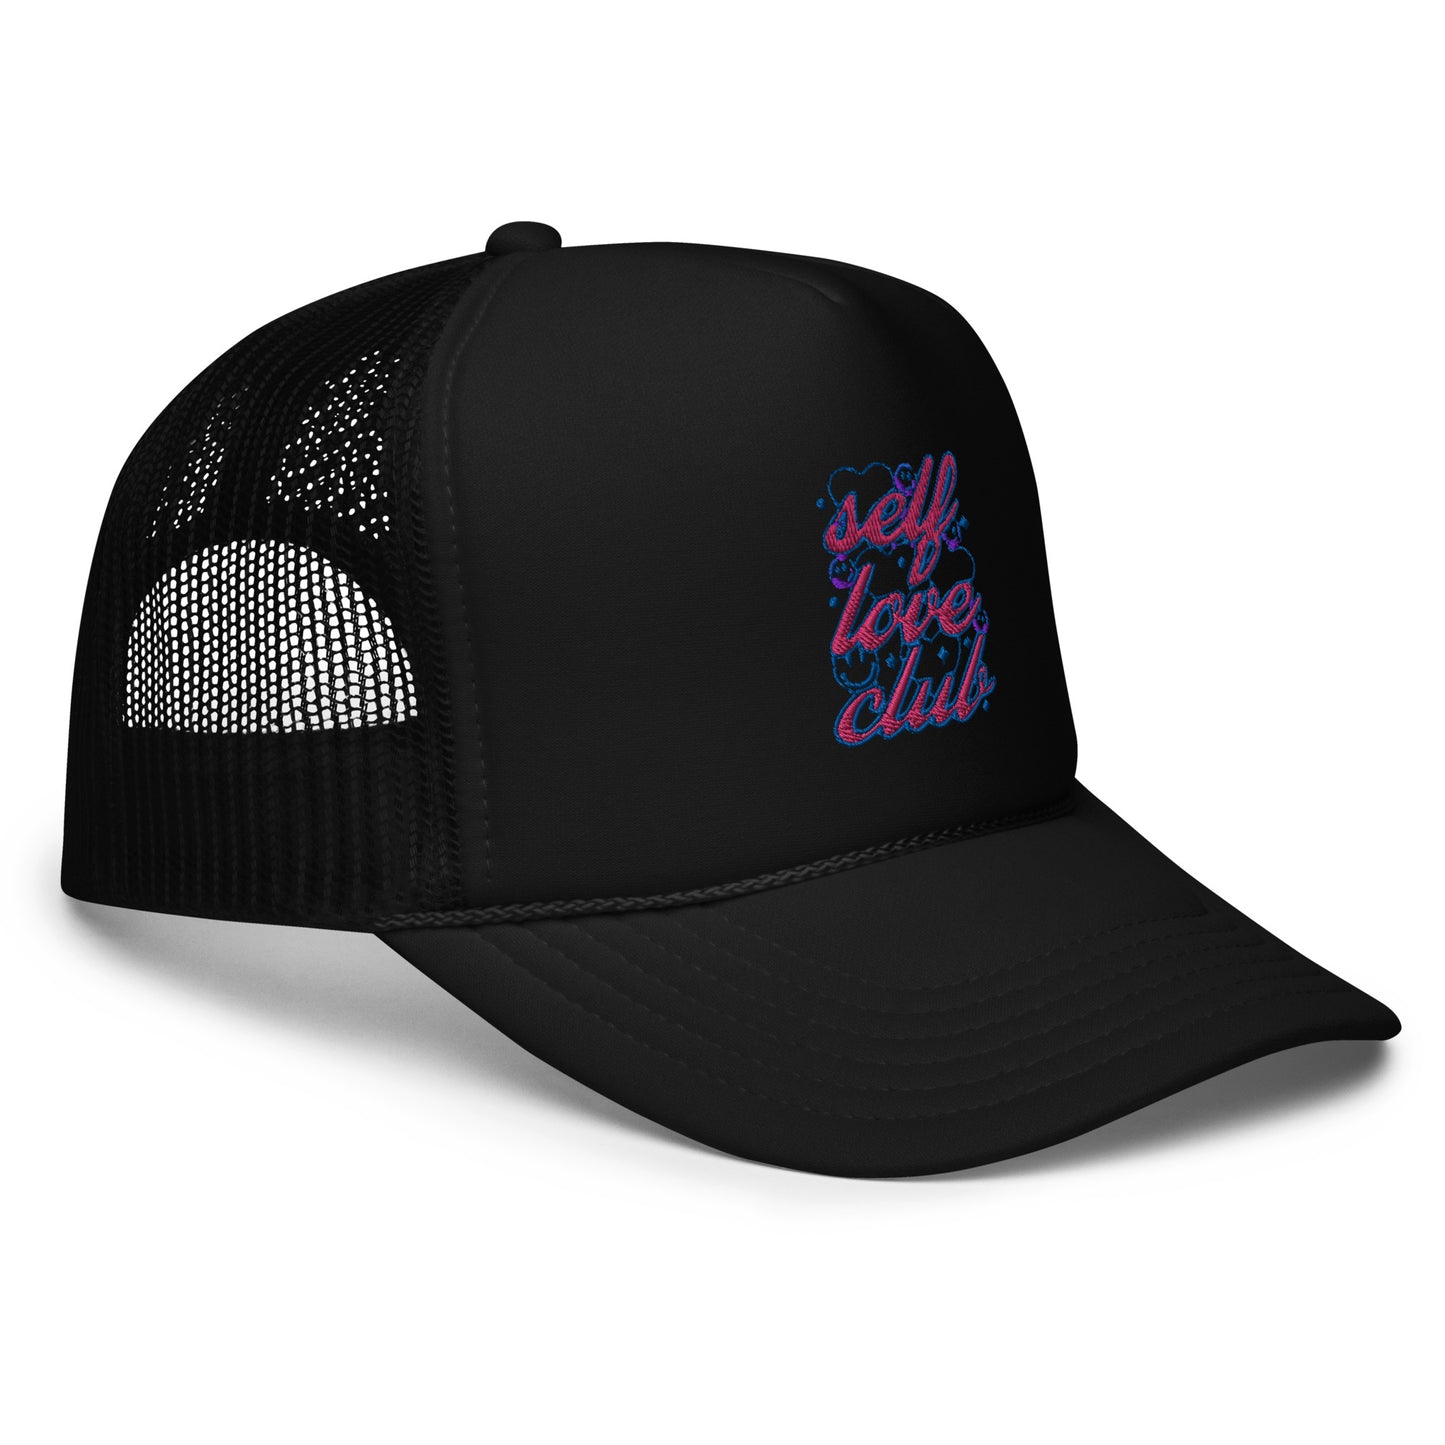 Self Love Club Foam trucker hat